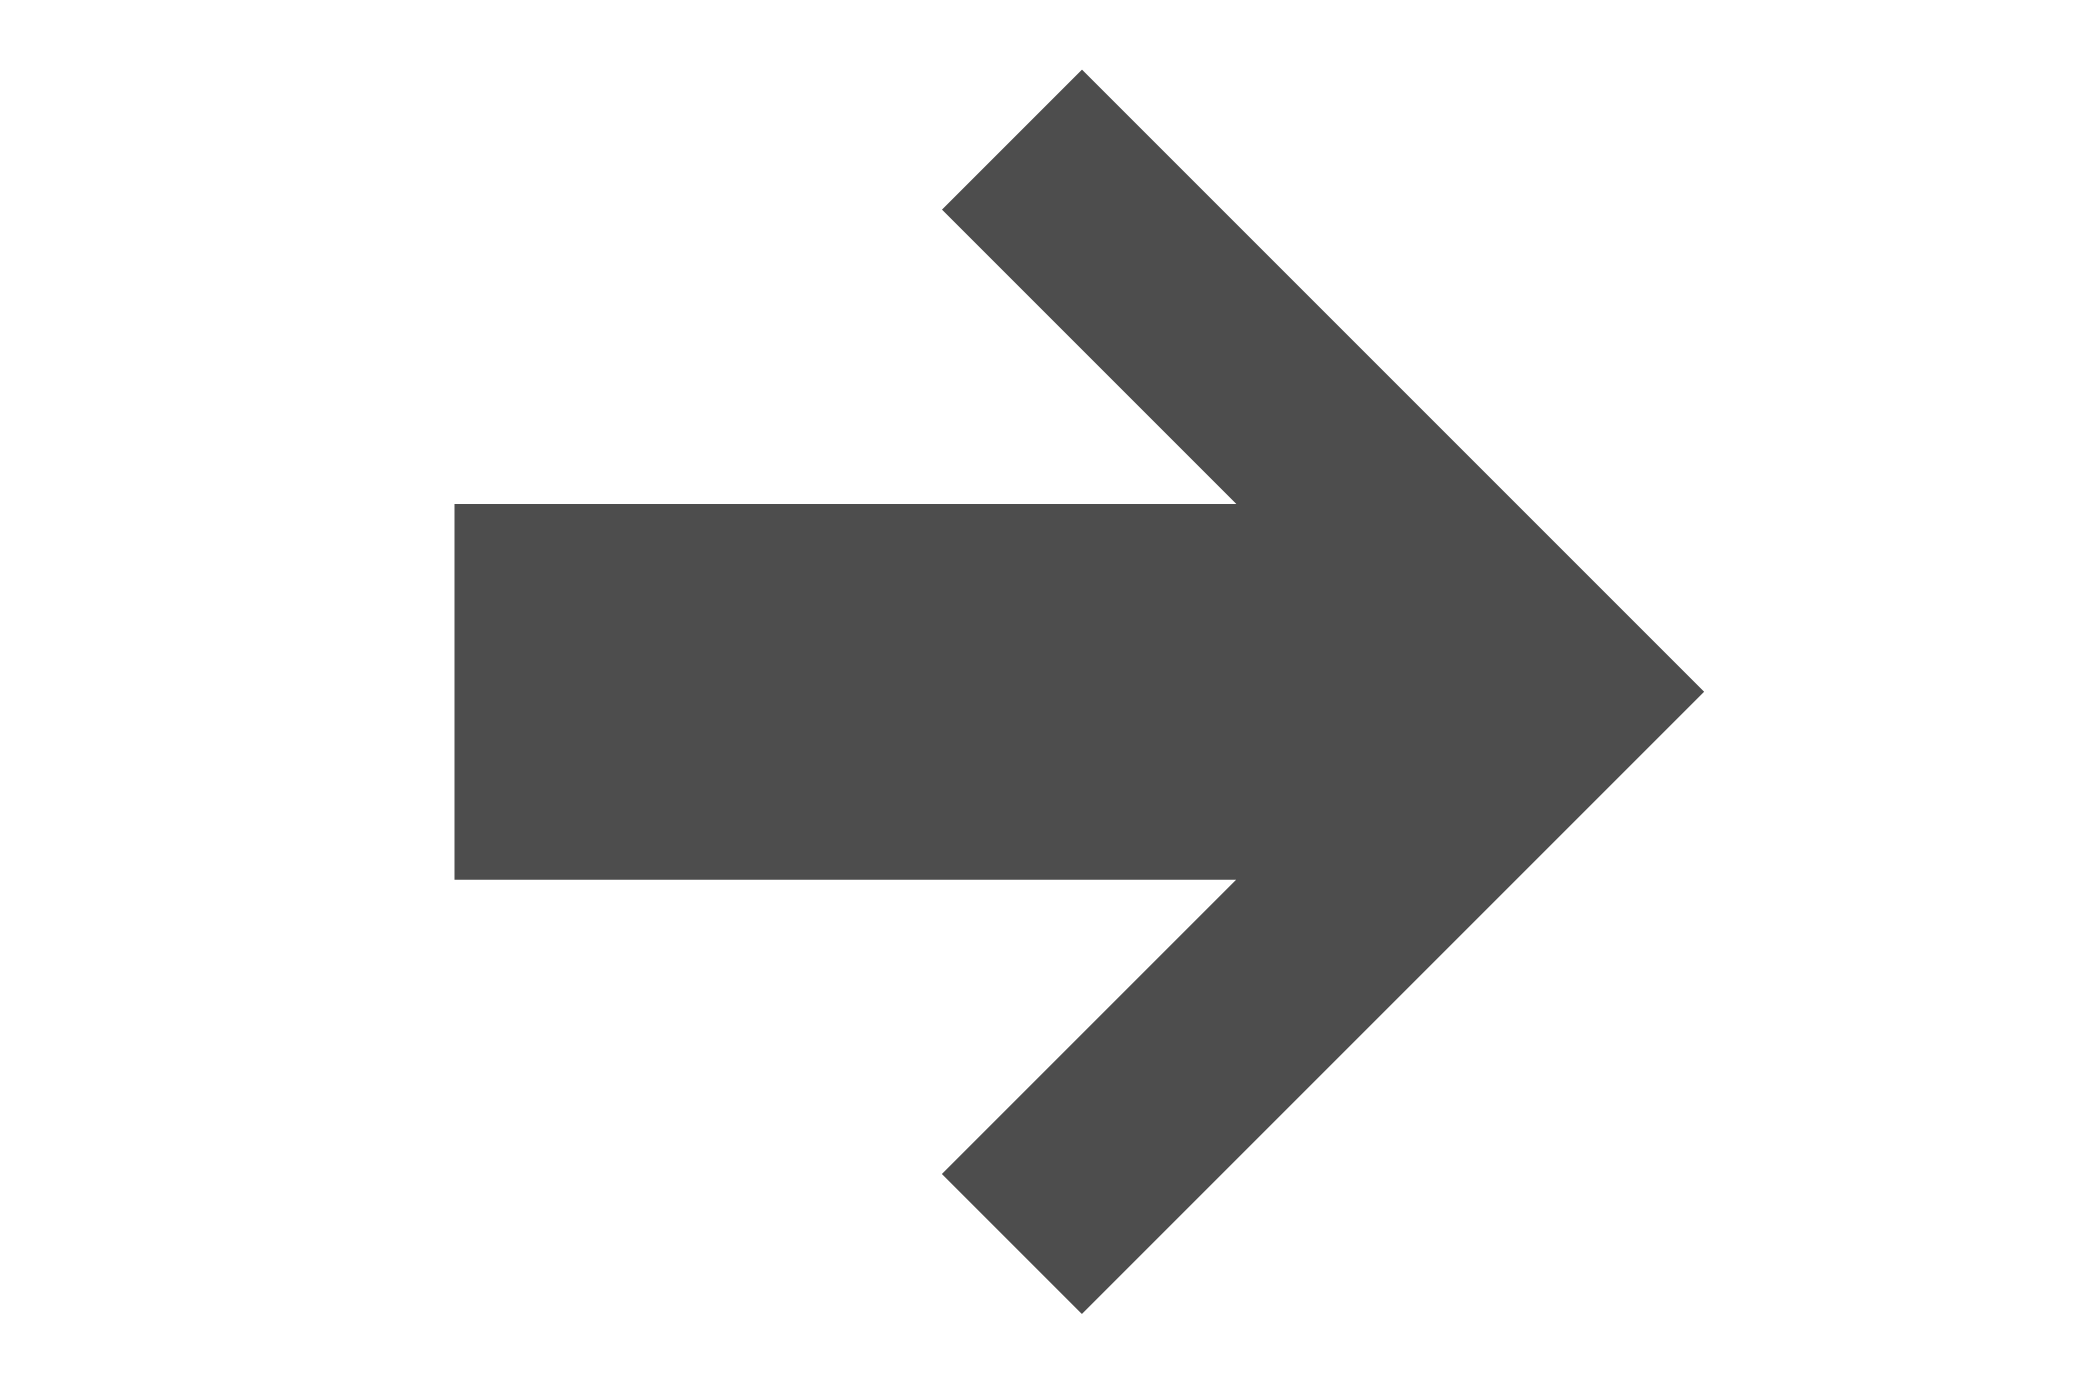 Flat design / Start / Direction / Sign arrow / Direction / Forward / Clip art / Vector / Beju curve / ai file / Edit